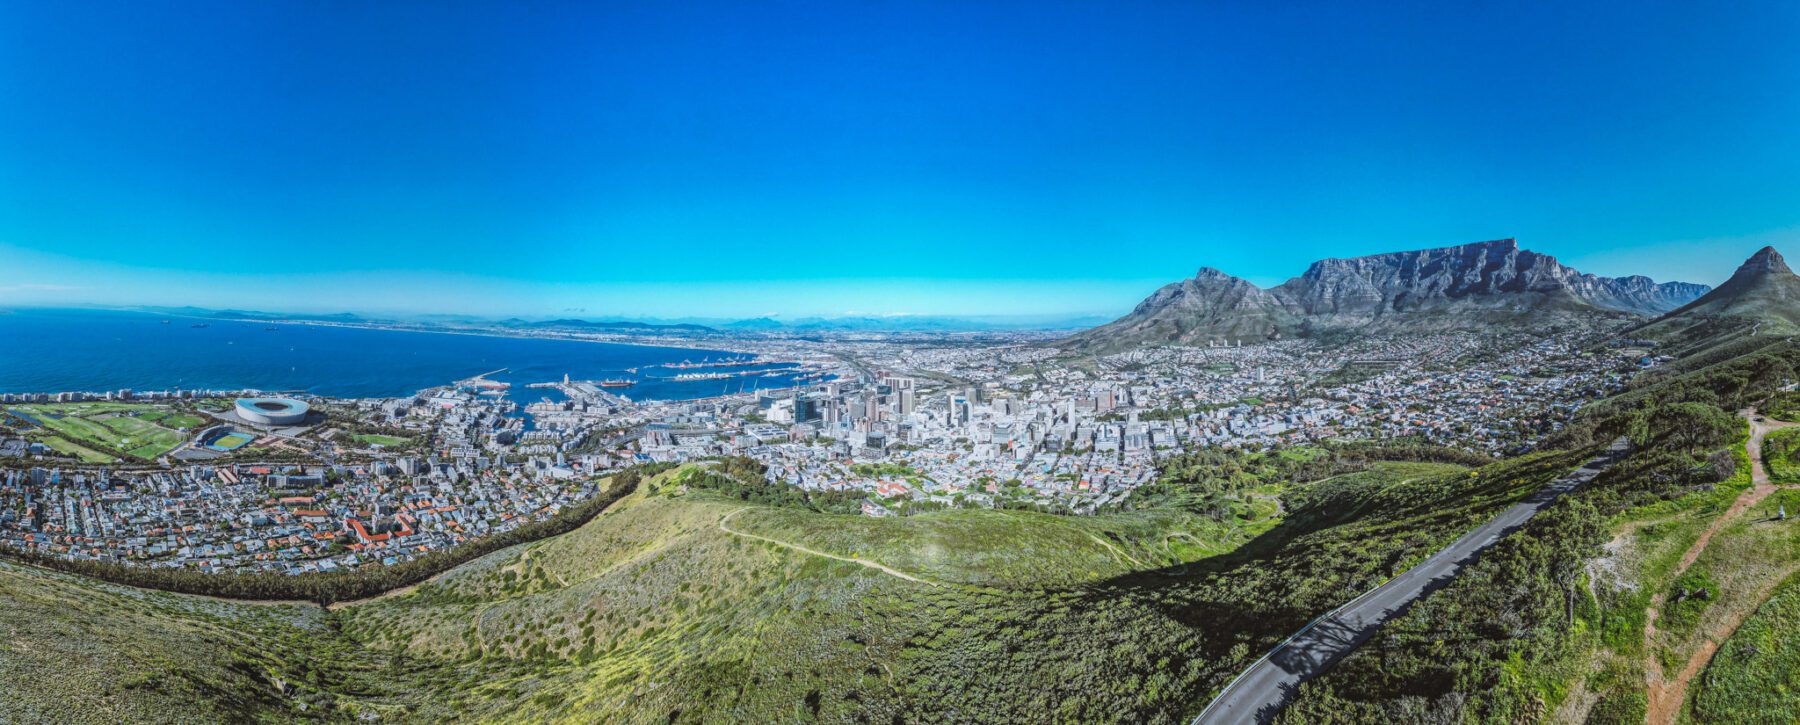 rondreis Zuid-Afrika kaapstad uitzicht